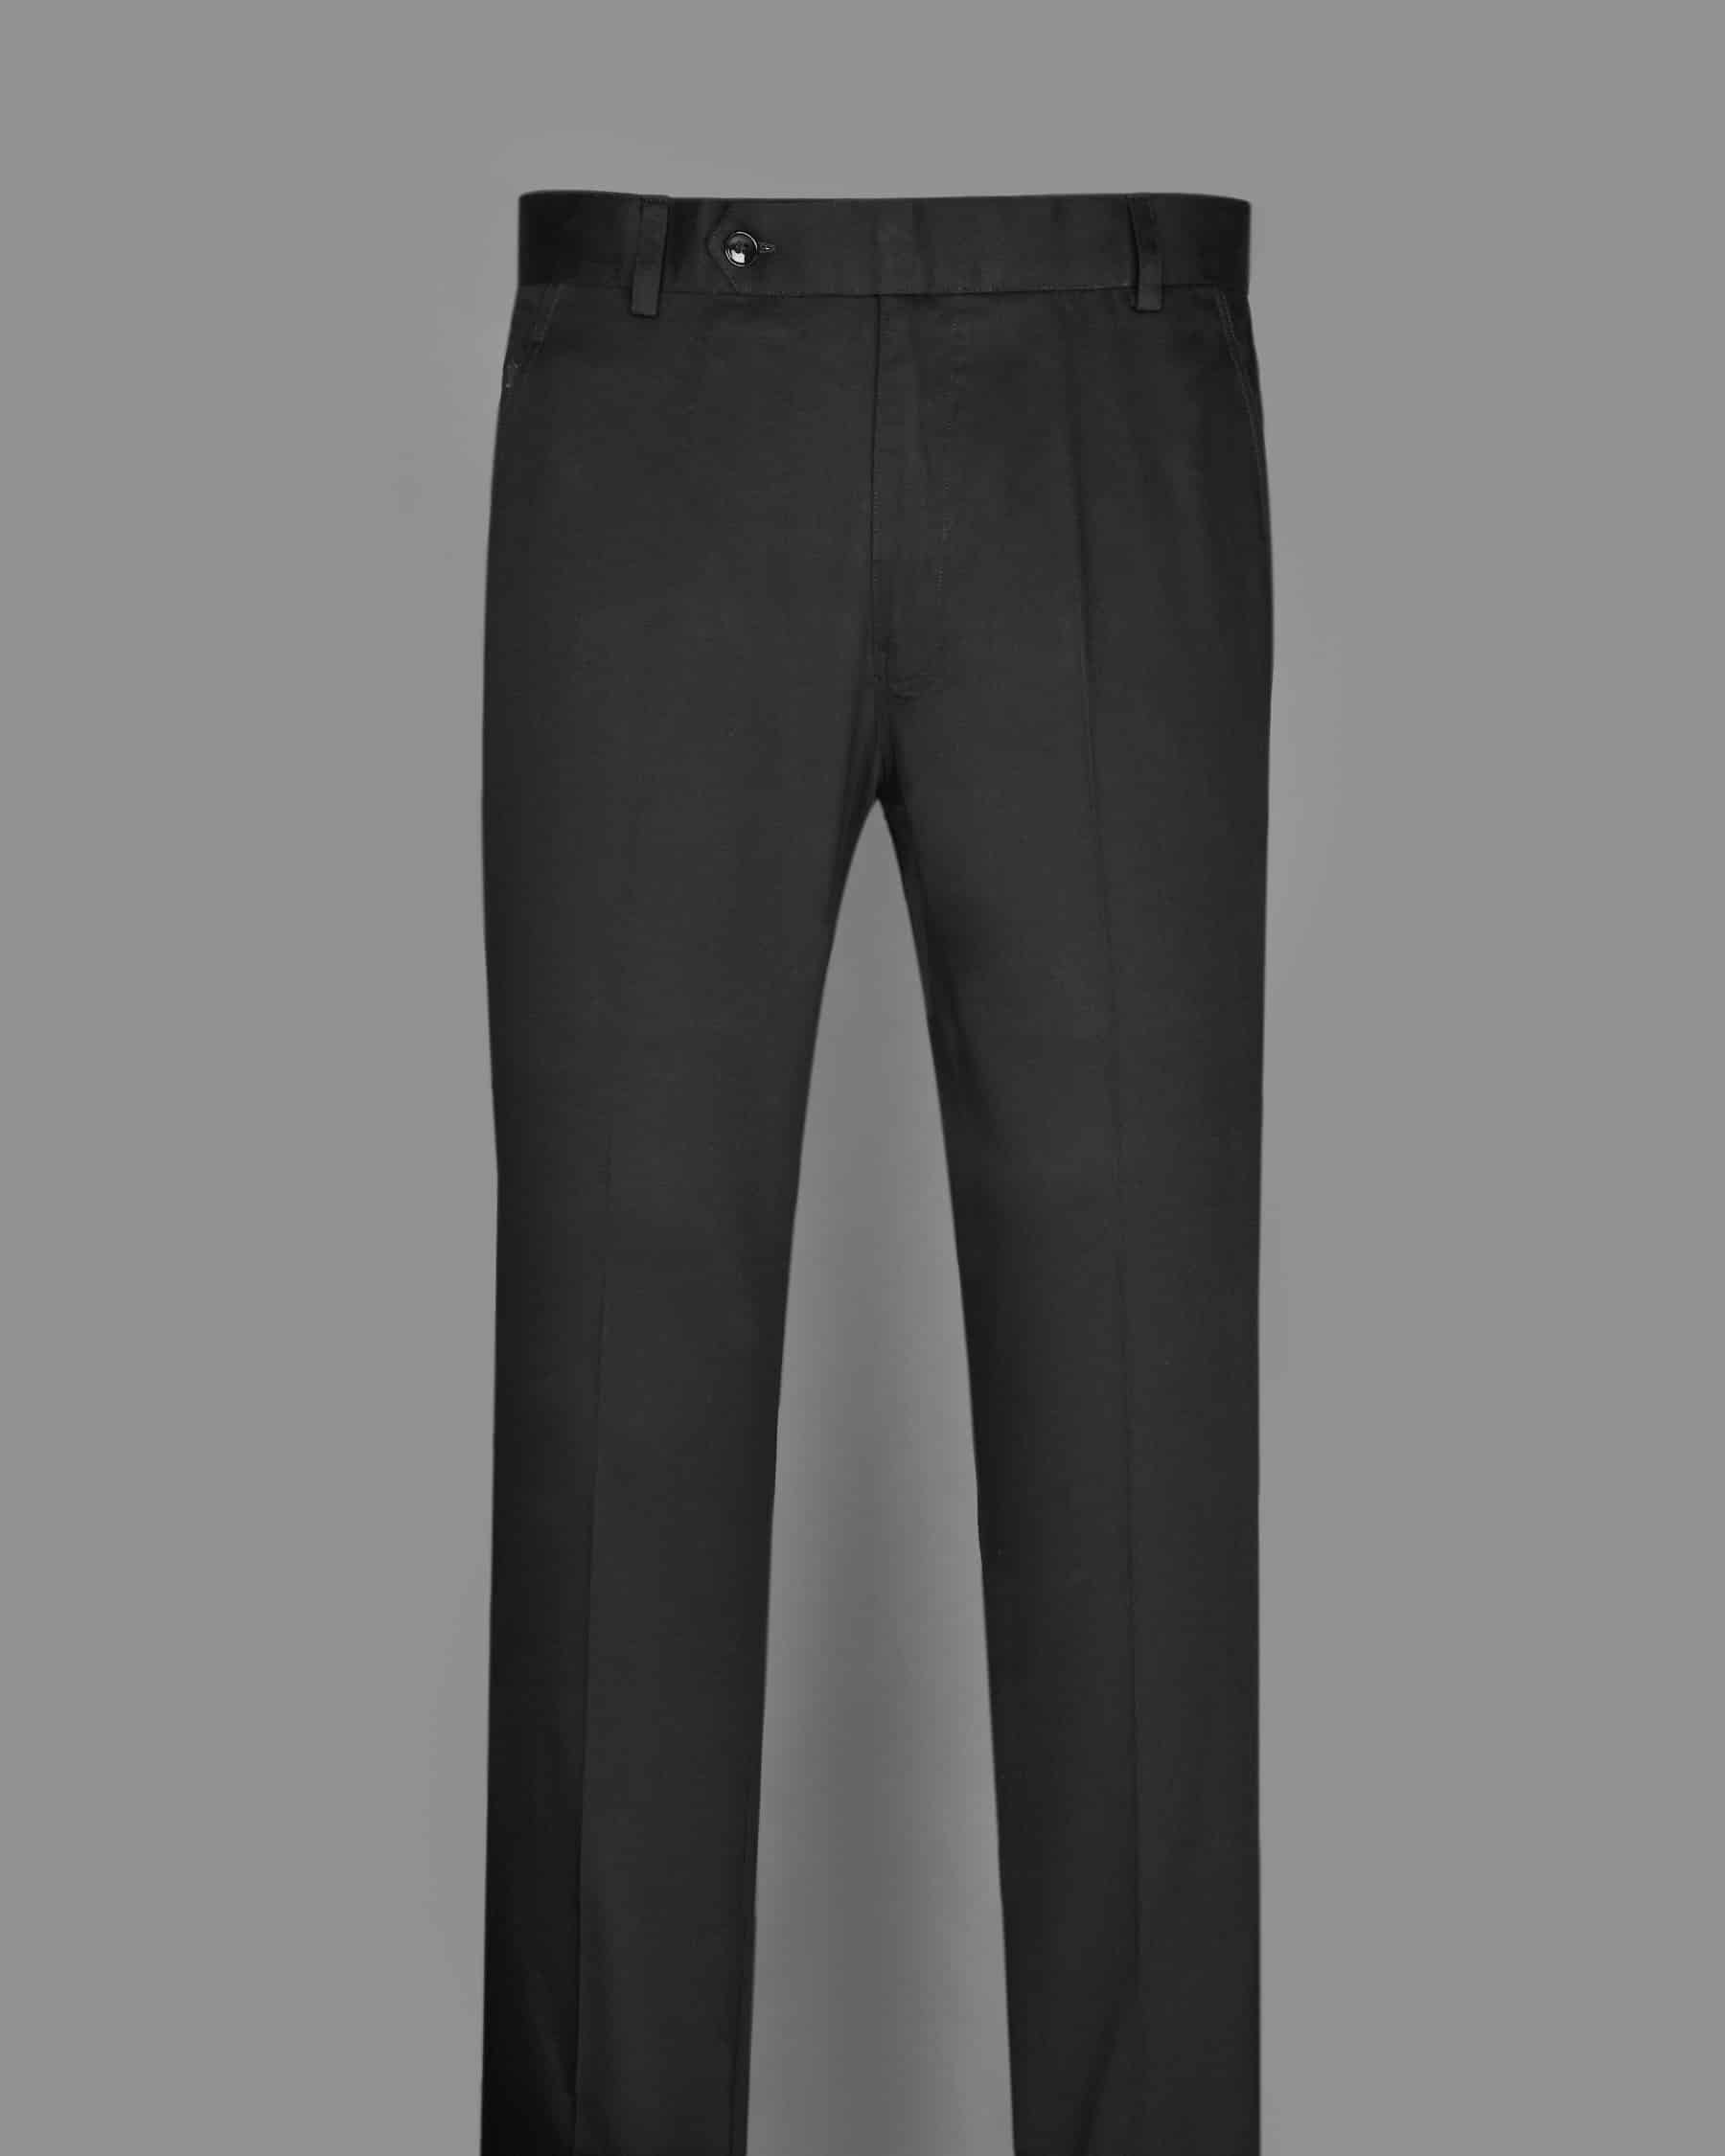 Jade Black Subtle Sheen Cross Placket Bandhgala/Mandarin wool blend Designer Suit ST366-D1-36, ST366-D1-38, ST366-D1-40, ST366-D1-42, ST366-D1-44, ST366-D1-46, ST366-D1-48, ST366-D1-50, ST366-D1-52, ST366-D1-54, ST366-D1-56, ST366-D1-58, ST366-D1-60